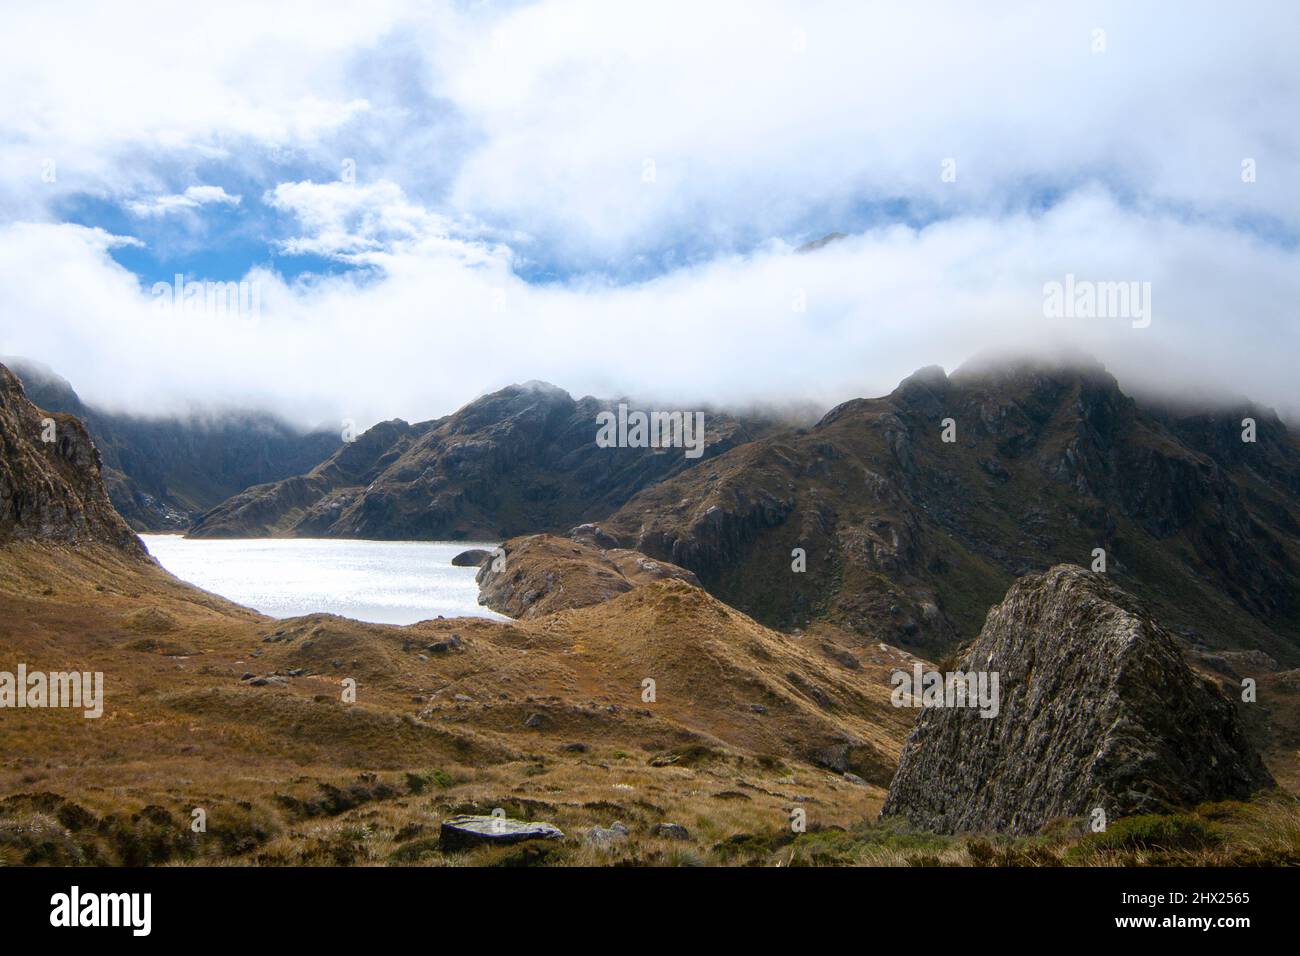 Paesaggio di montagne nuvolose e lago Harris, Alpi meridionali, Routeburn Track Harris Saddle, Nuova Zelanda Foto Stock